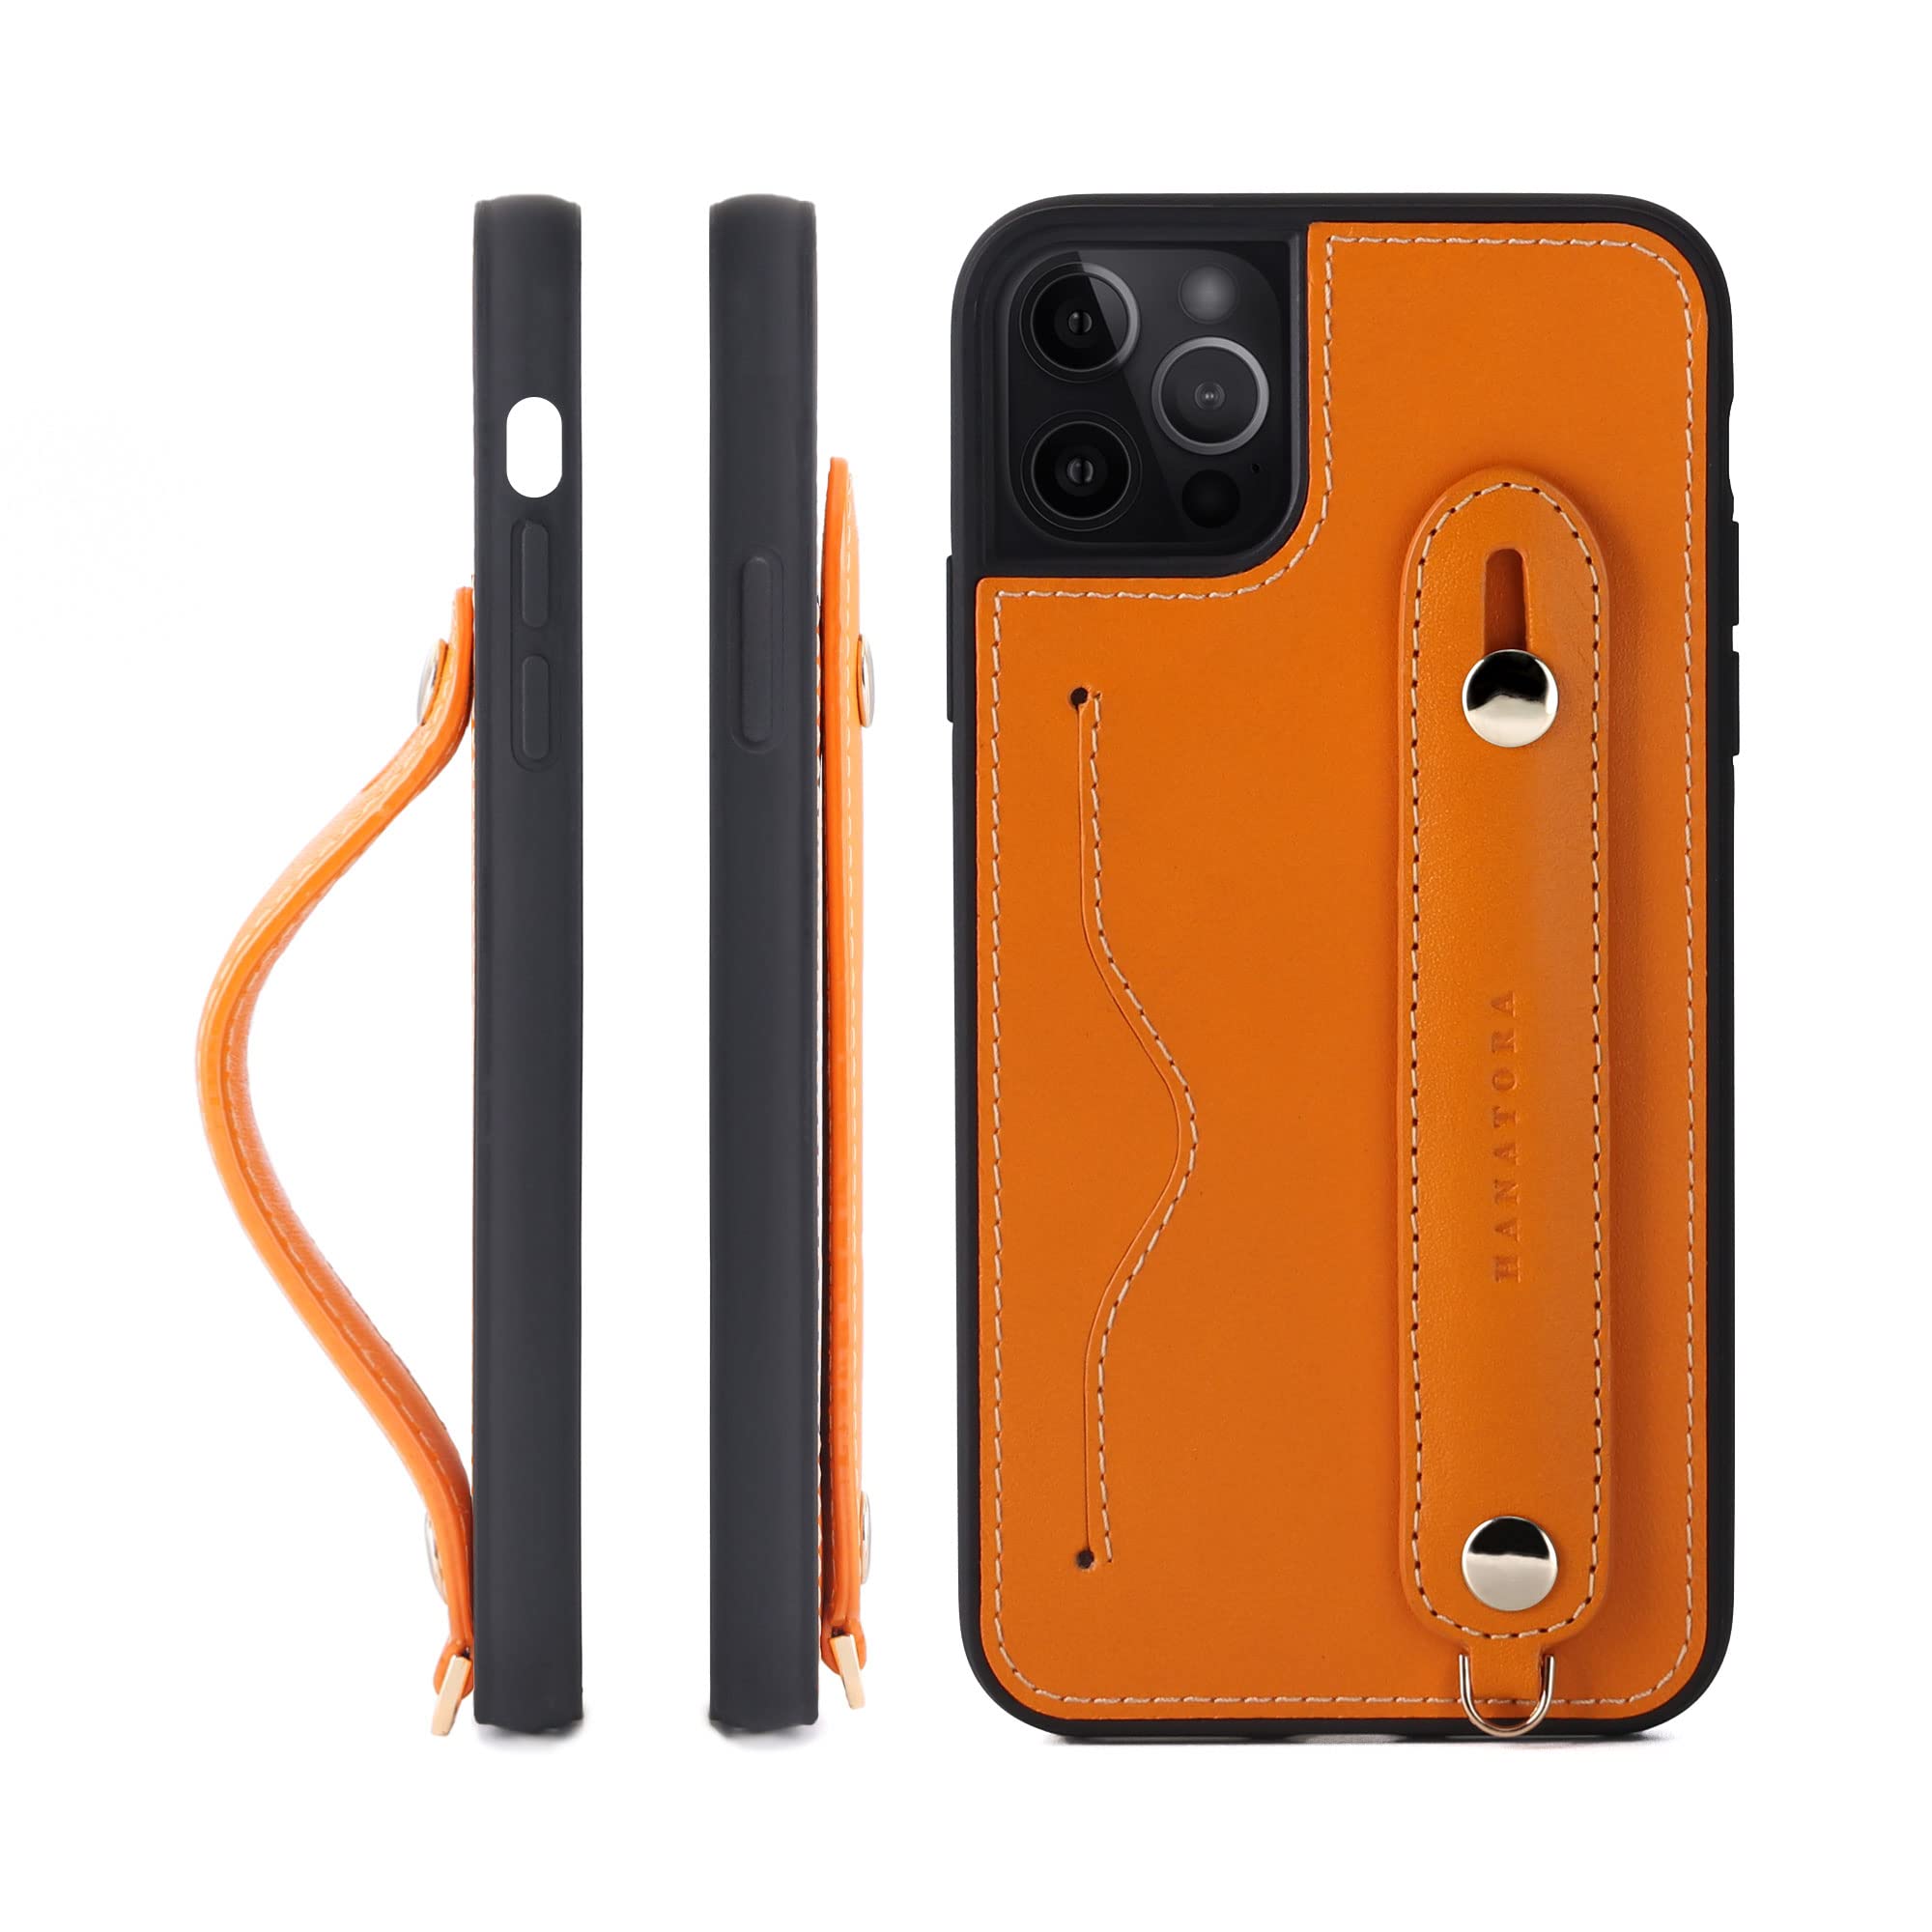 [HANATORA] iPhone13 Pro Max ケース 本革 グリップケース レザー ストラップ付属 イタリア製牛革 ヌメ革 片手操作 カード収納 スタンド機能 メンズ レディース オレンジ CGH-13ProMax-Orange